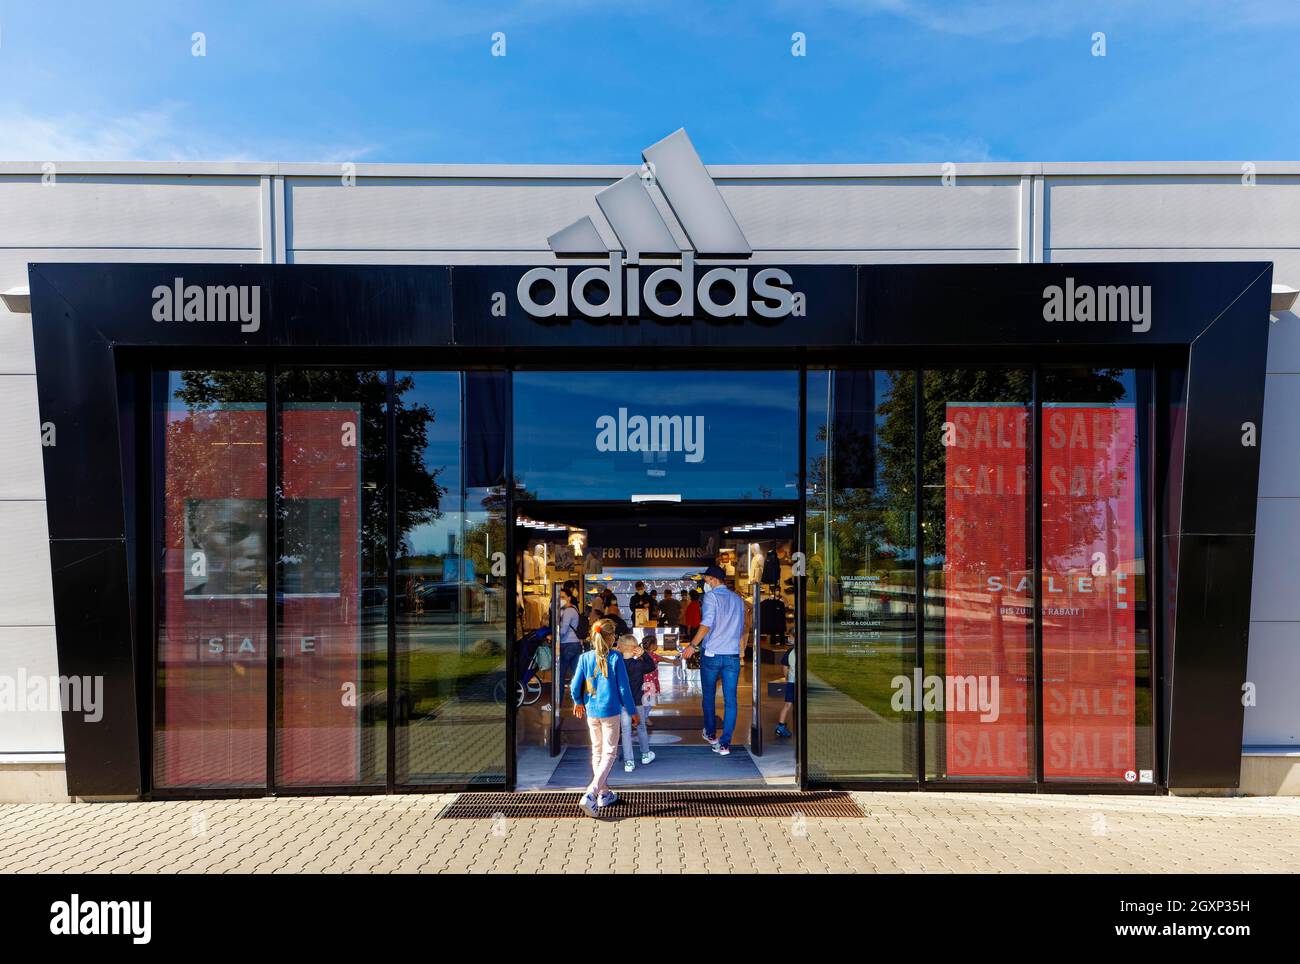 Tremendo clon Aparador Adidas factory outlet -Fotos und -Bildmaterial in hoher Auflösung – Alamy